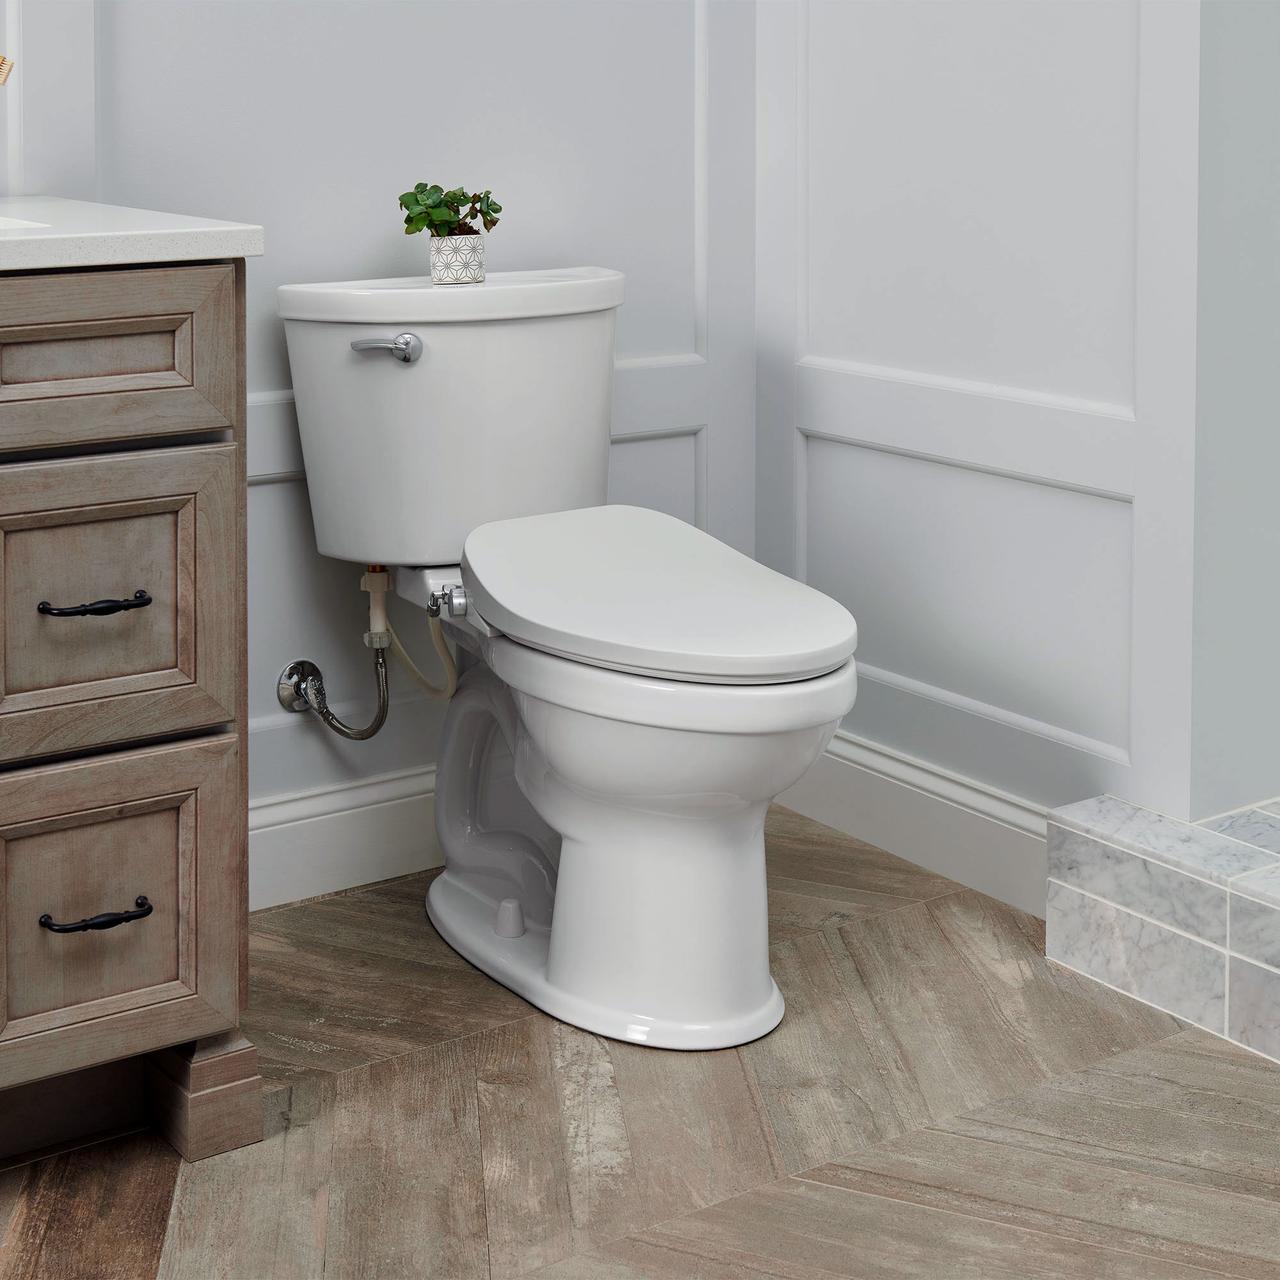 Toilet seat, Plumbing fixture, Bathroom cabinet, Cabinetry, Purple, Tap, Drawer